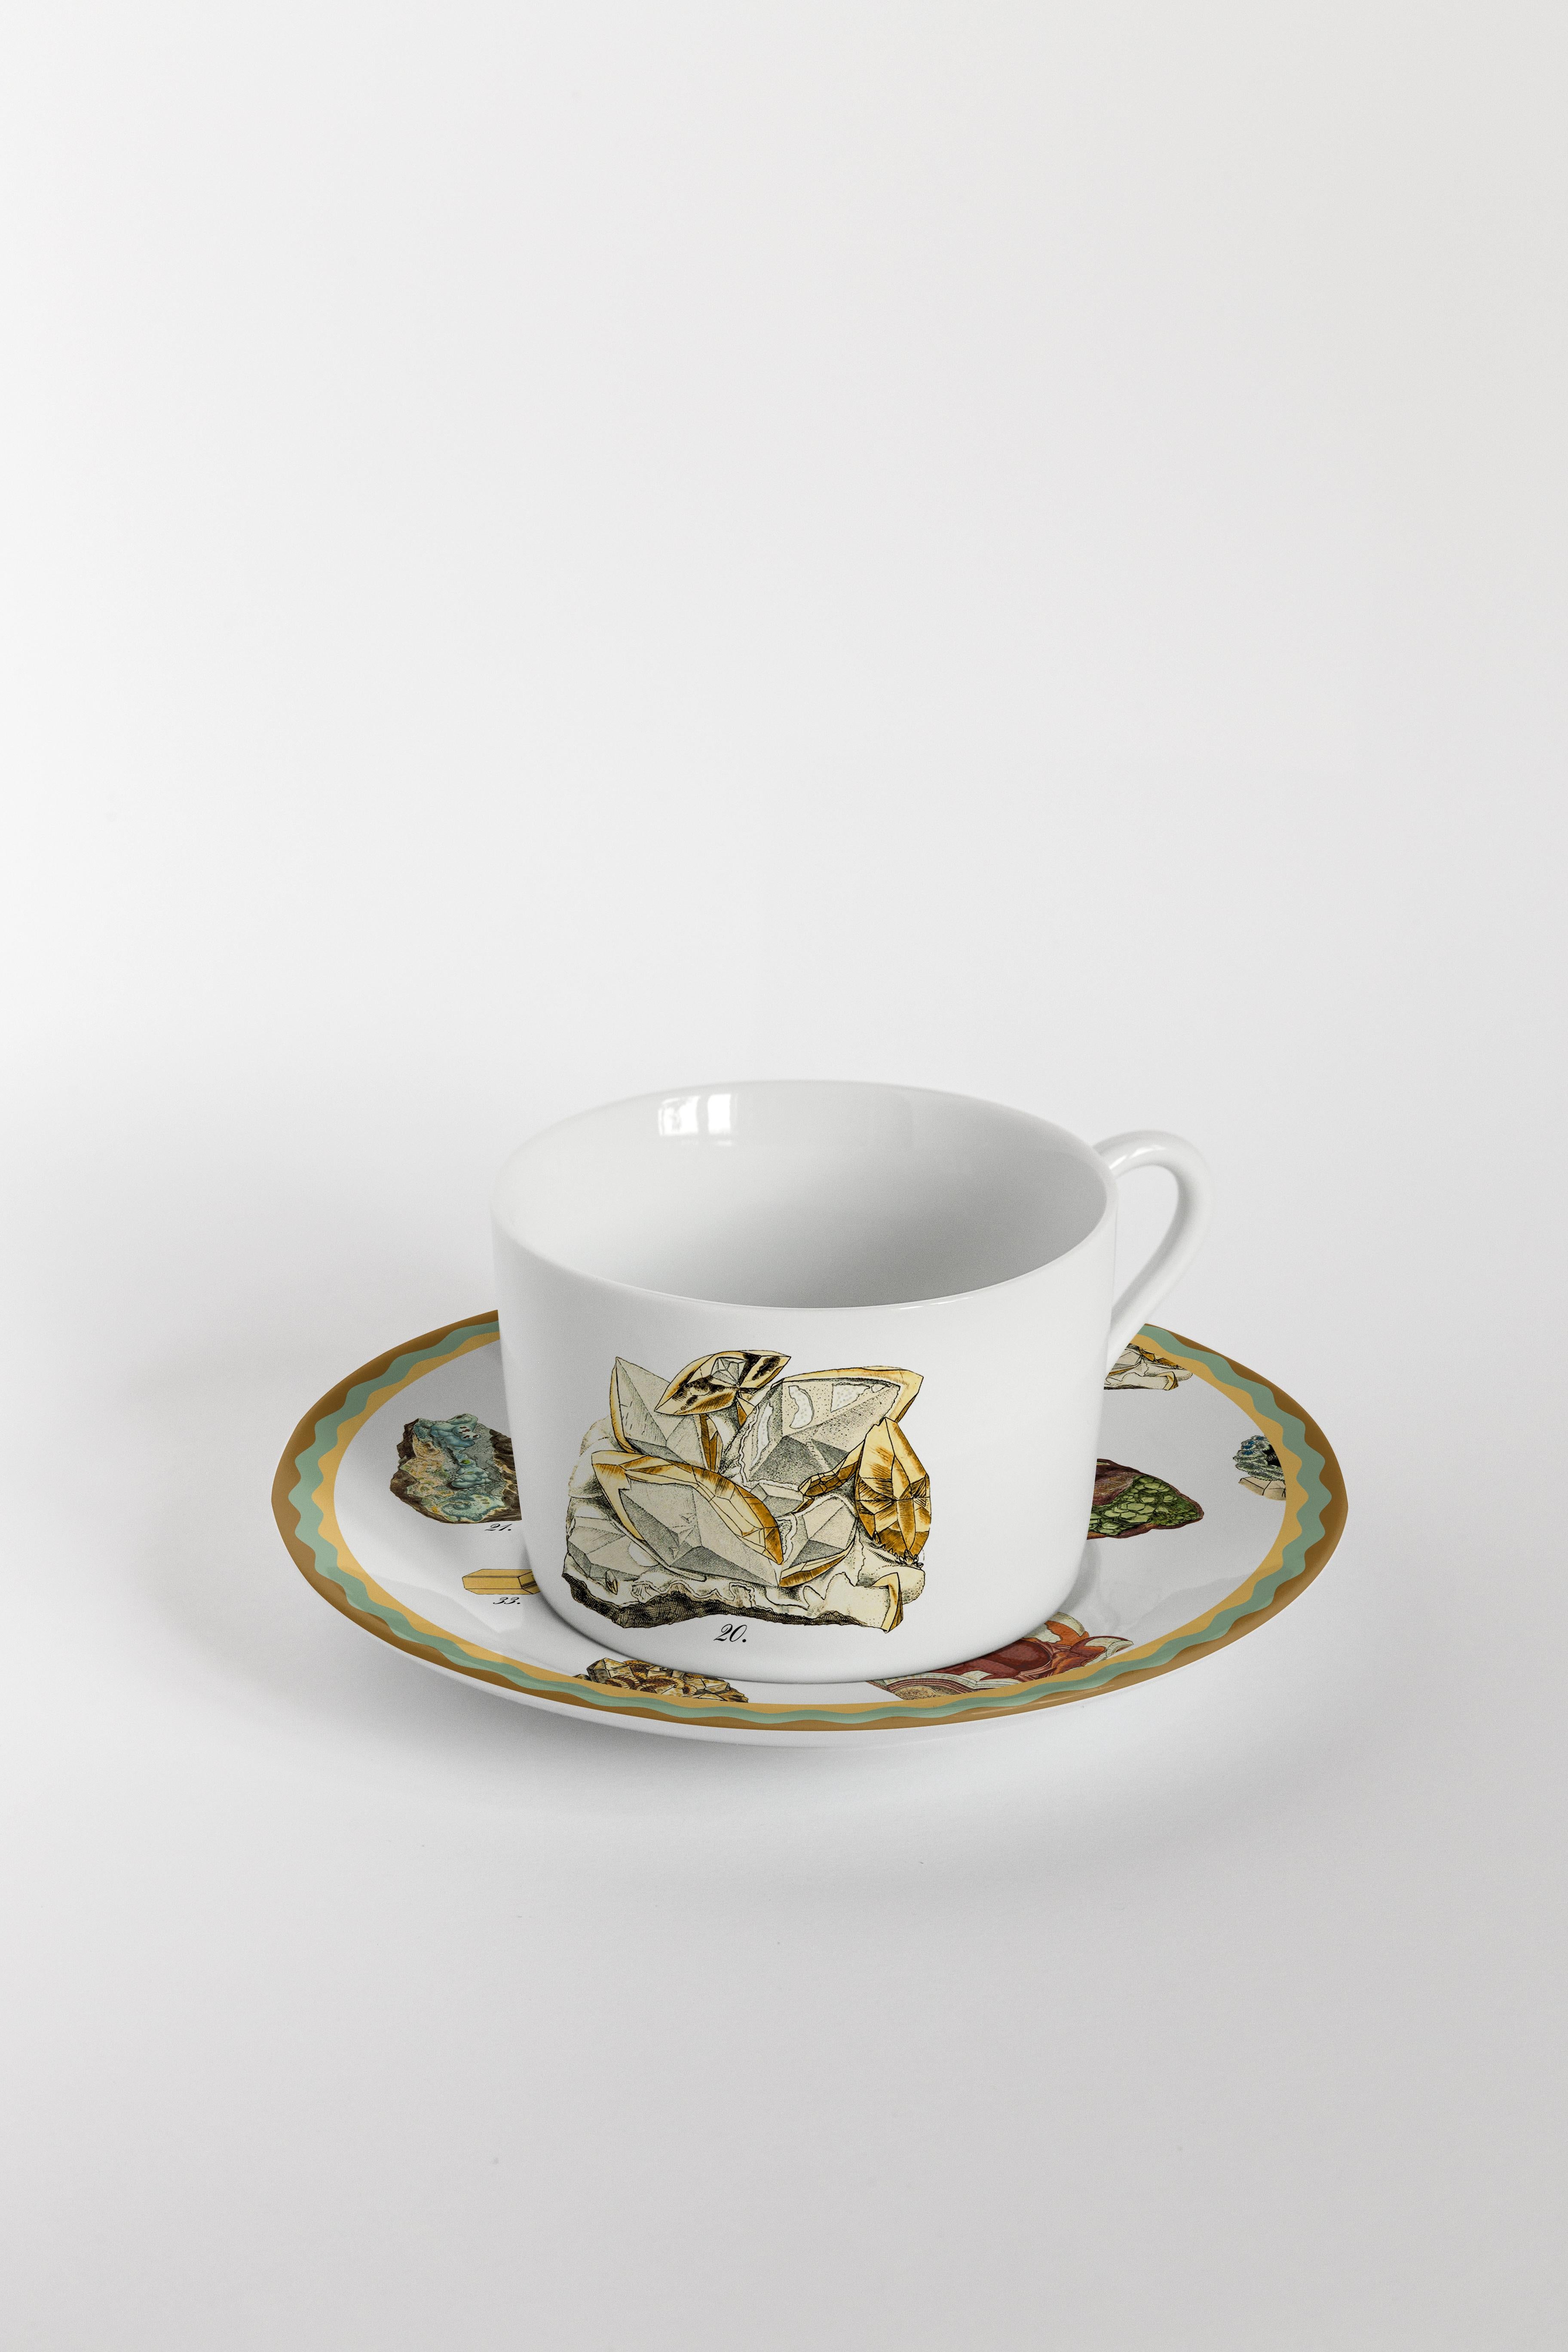 Porcelain Cabinet De Curiosités, Six Contemporary Decorated Tea Cups with Plates For Sale